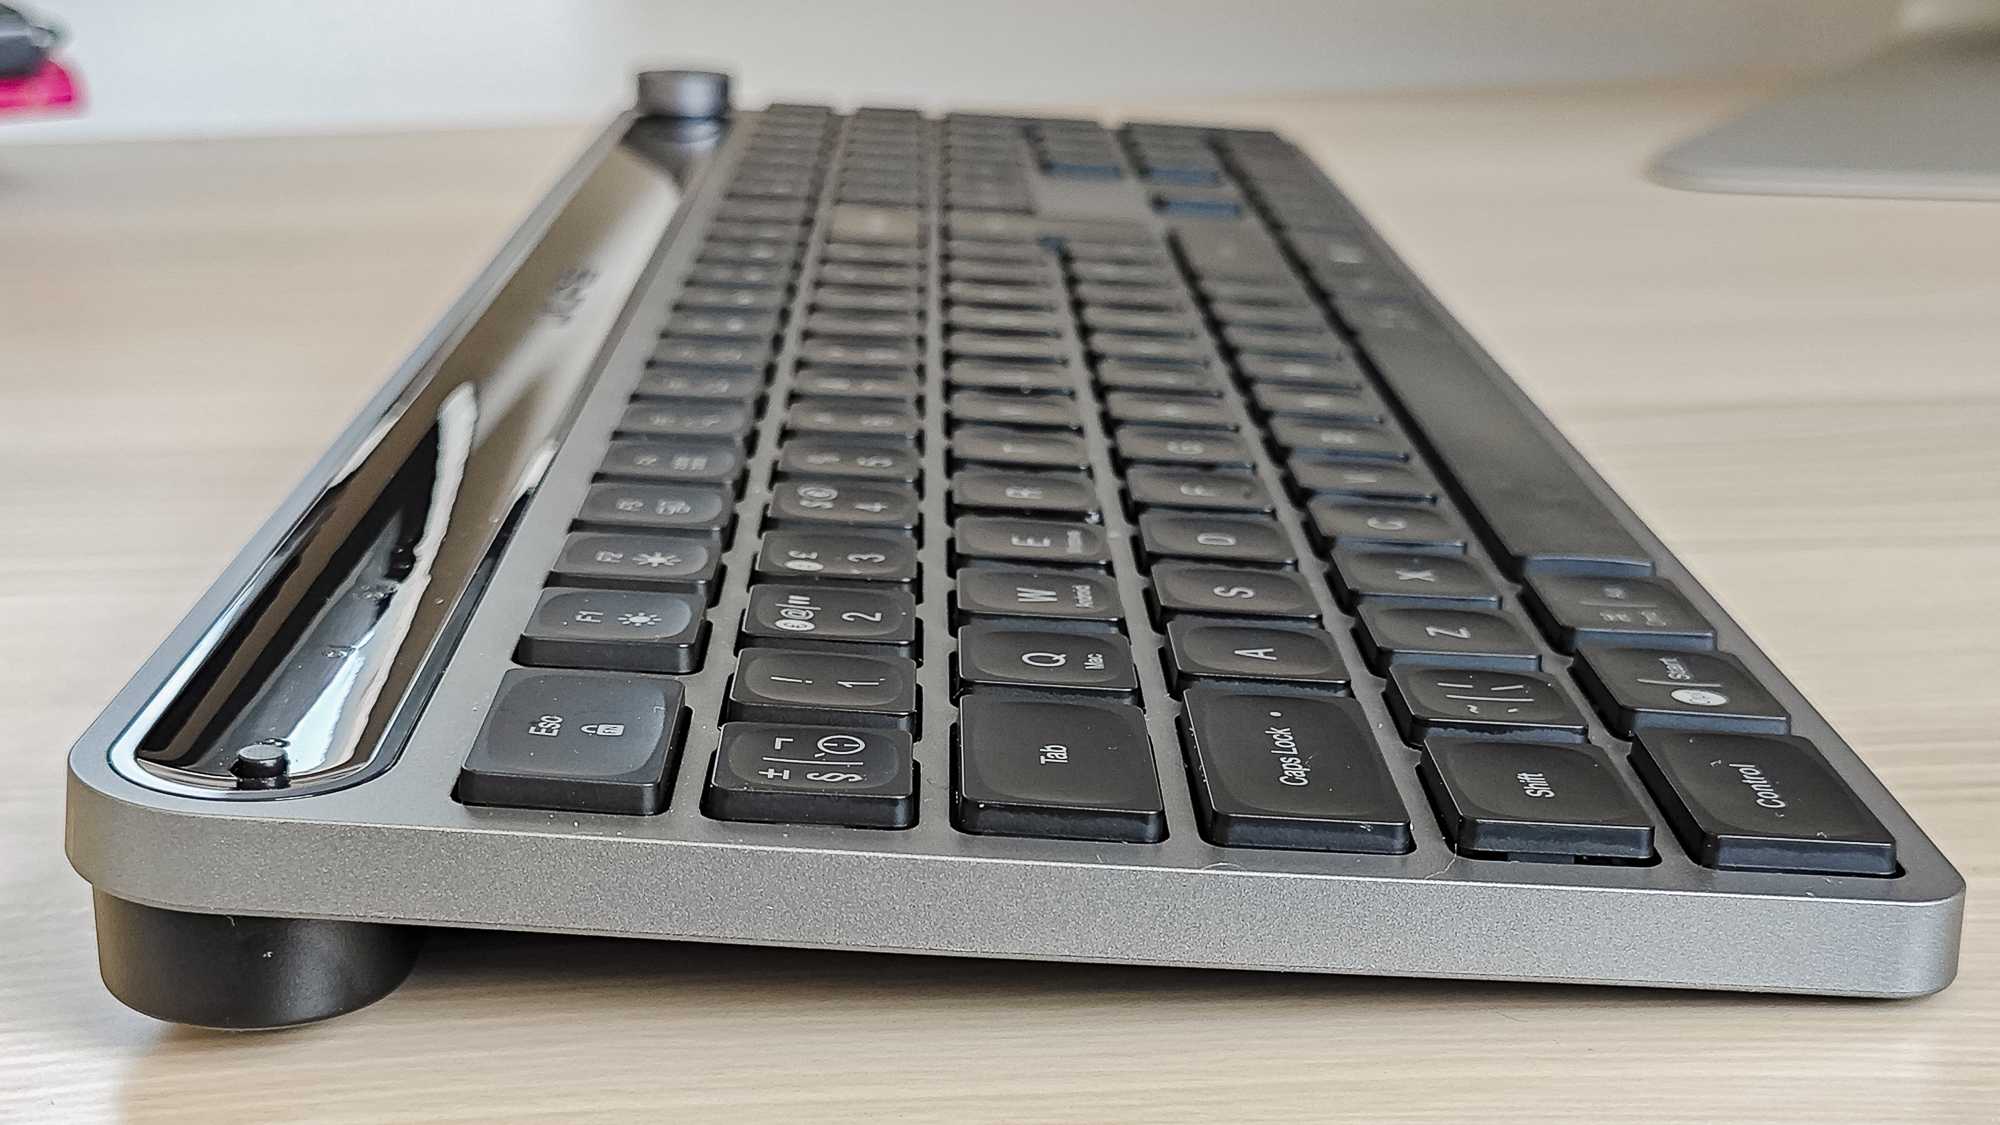 JLab Epic Wireless Keyboard review